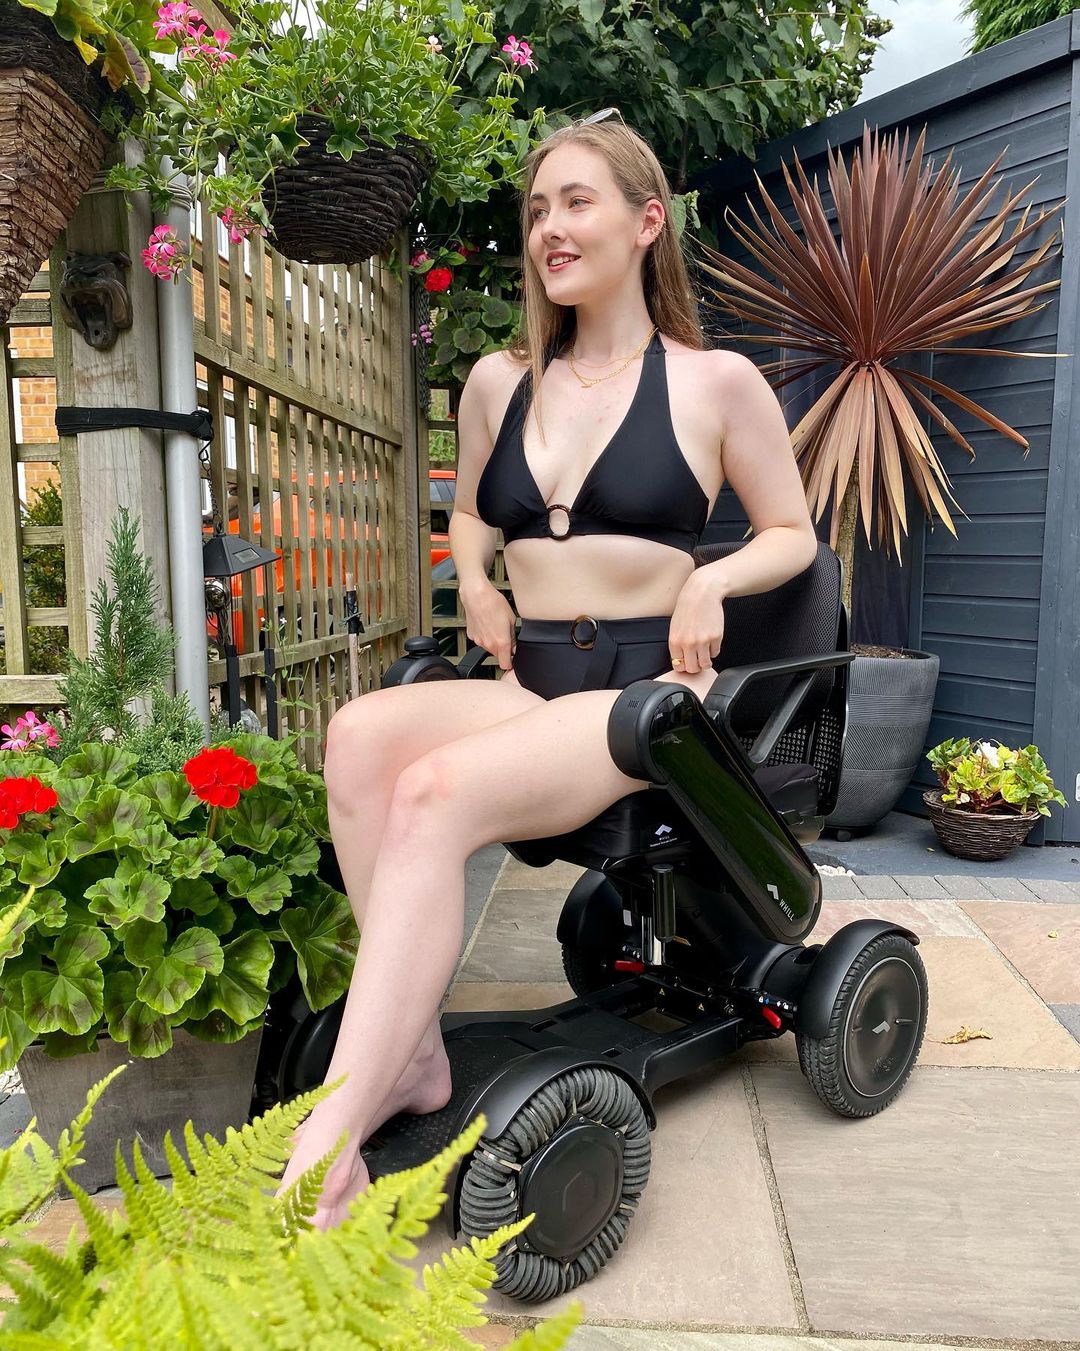 Georgia is wearing the Jayne black bikini while using a wheelchair